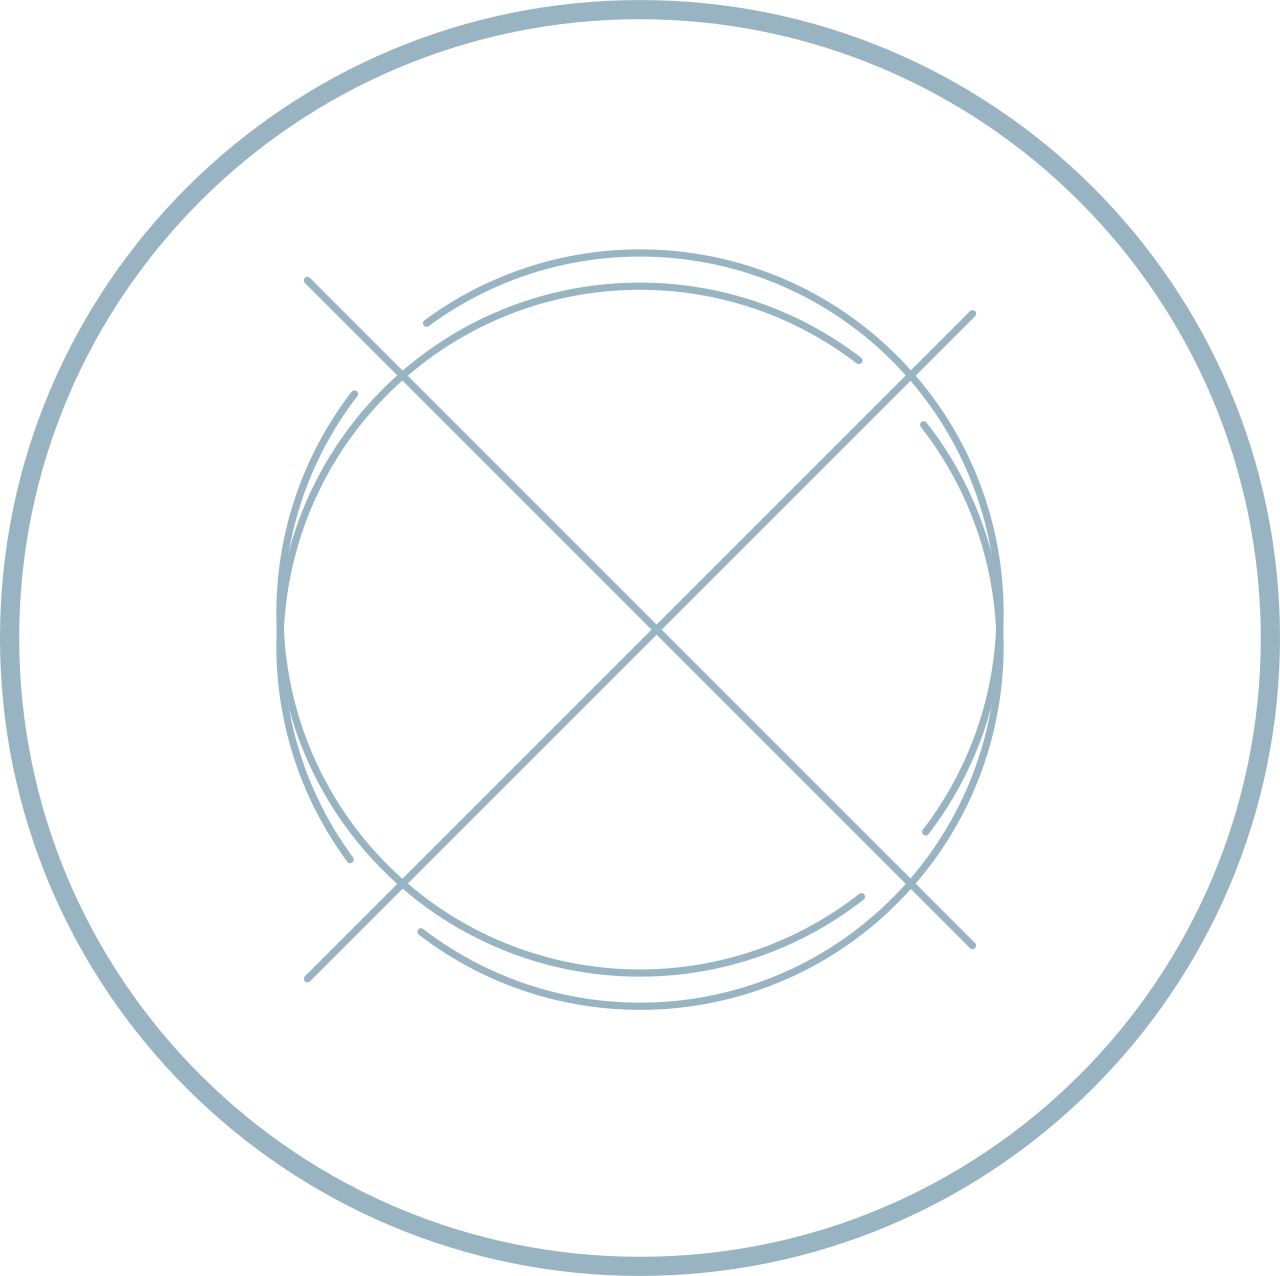 RISKY BUSINESS CLOTHING CO's logo